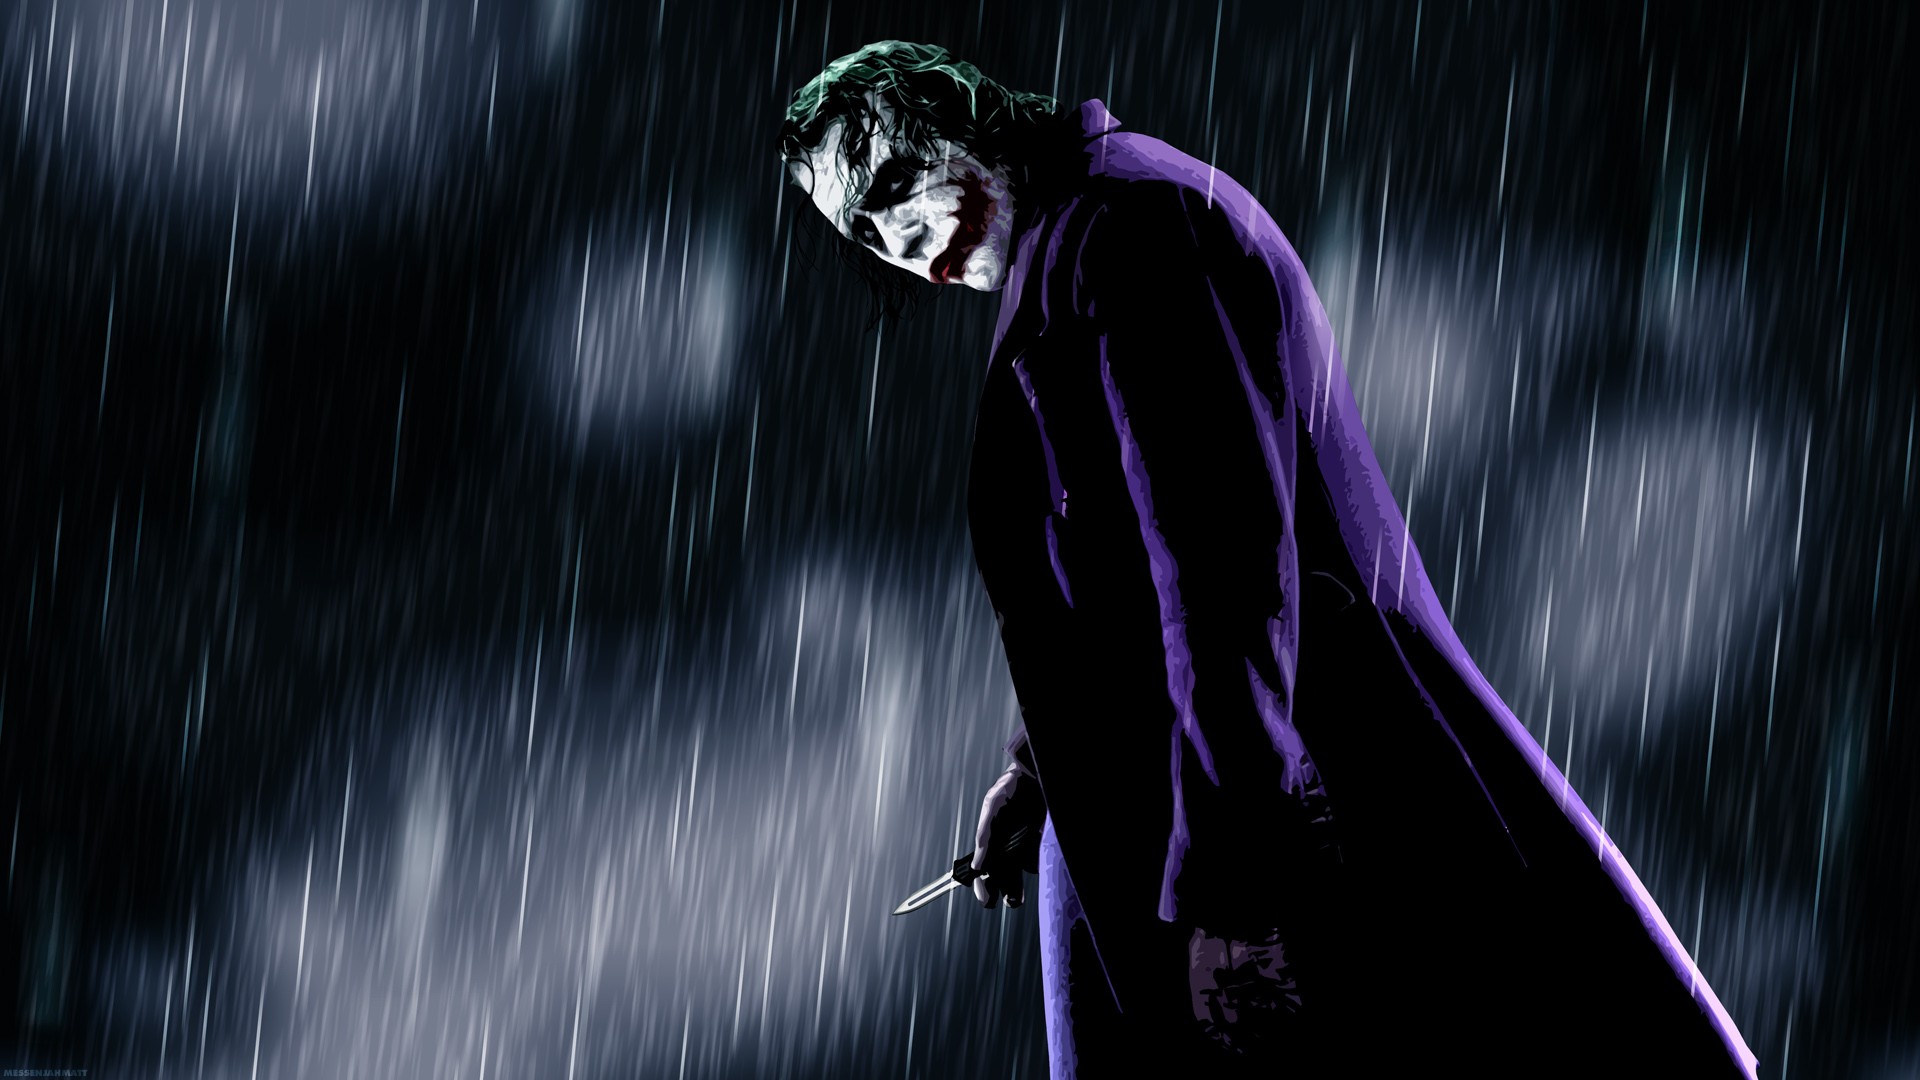 MessenjahMatt, Joker, Heath Ledger, movies, Batman, The Dark Knight, rain,  villains | 1920x1080 Wallpaper 